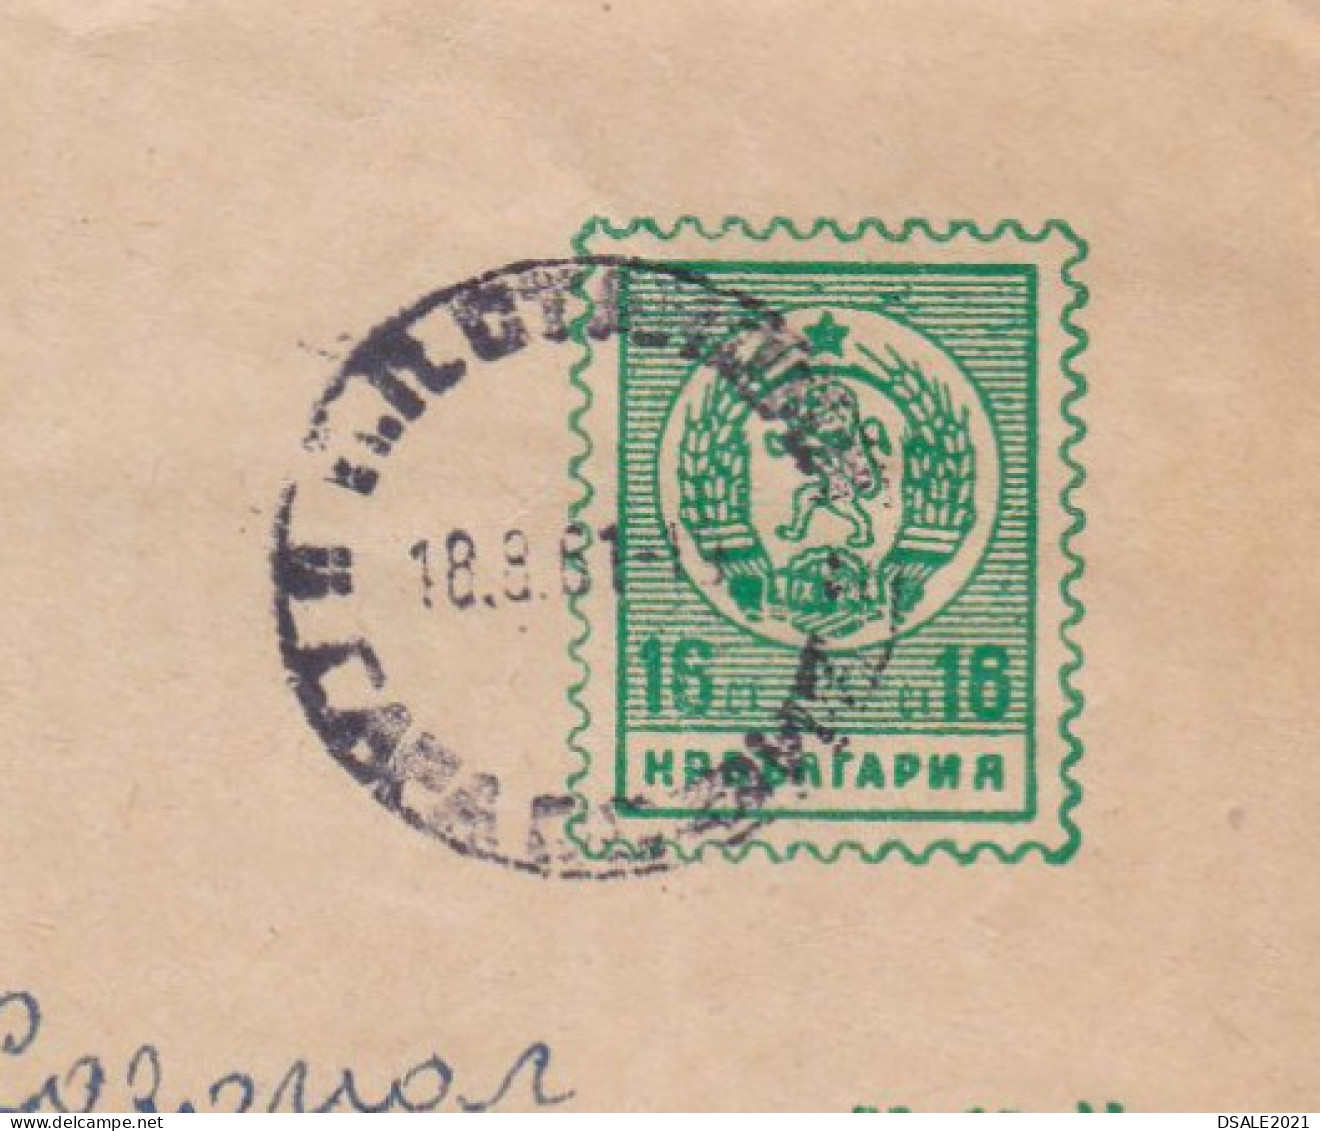 Bulgaria Bulgarie 1960s Postal Stationery Cover - 16St. (PLANT), Entier, Sent SOFIA Railway Station Post Office (68207) - Omslagen